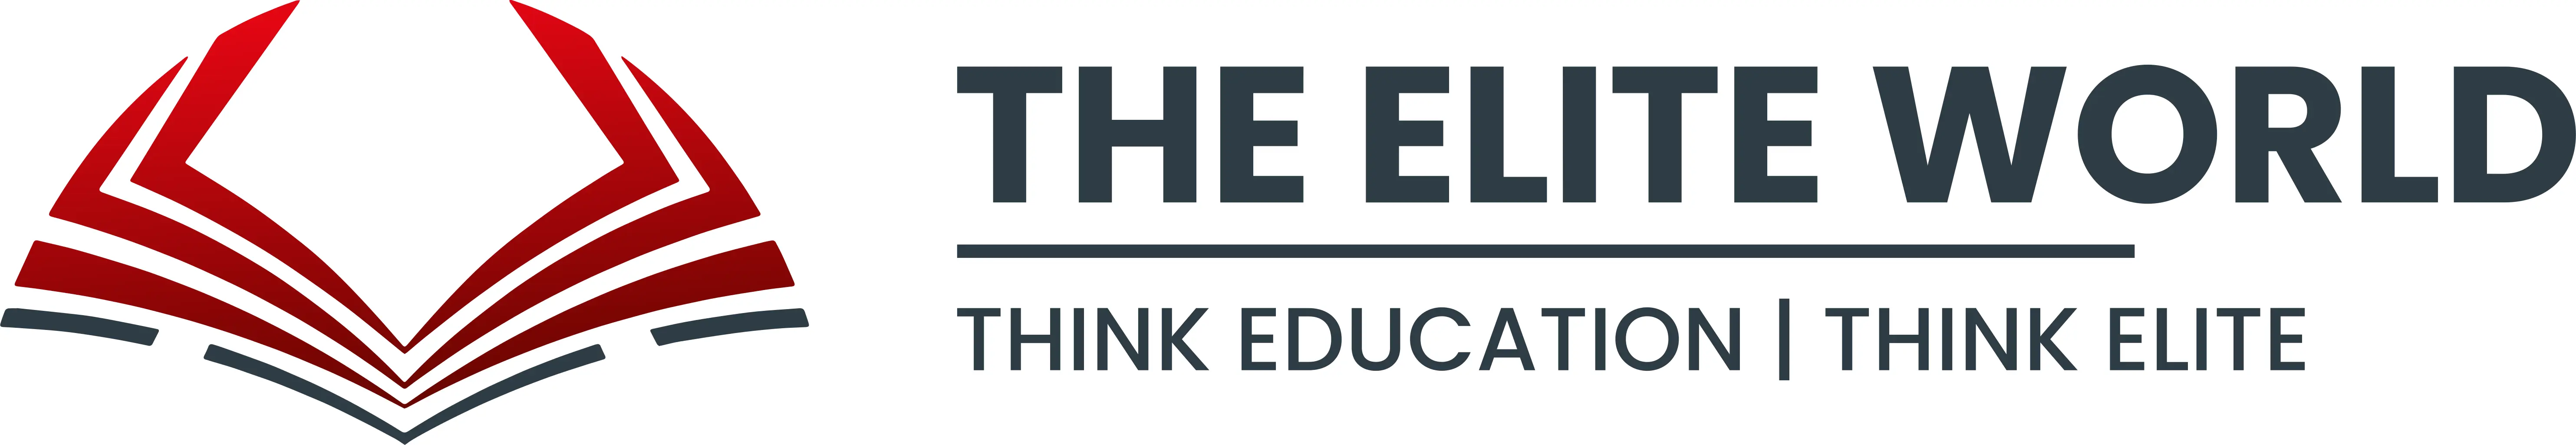 Elite think education